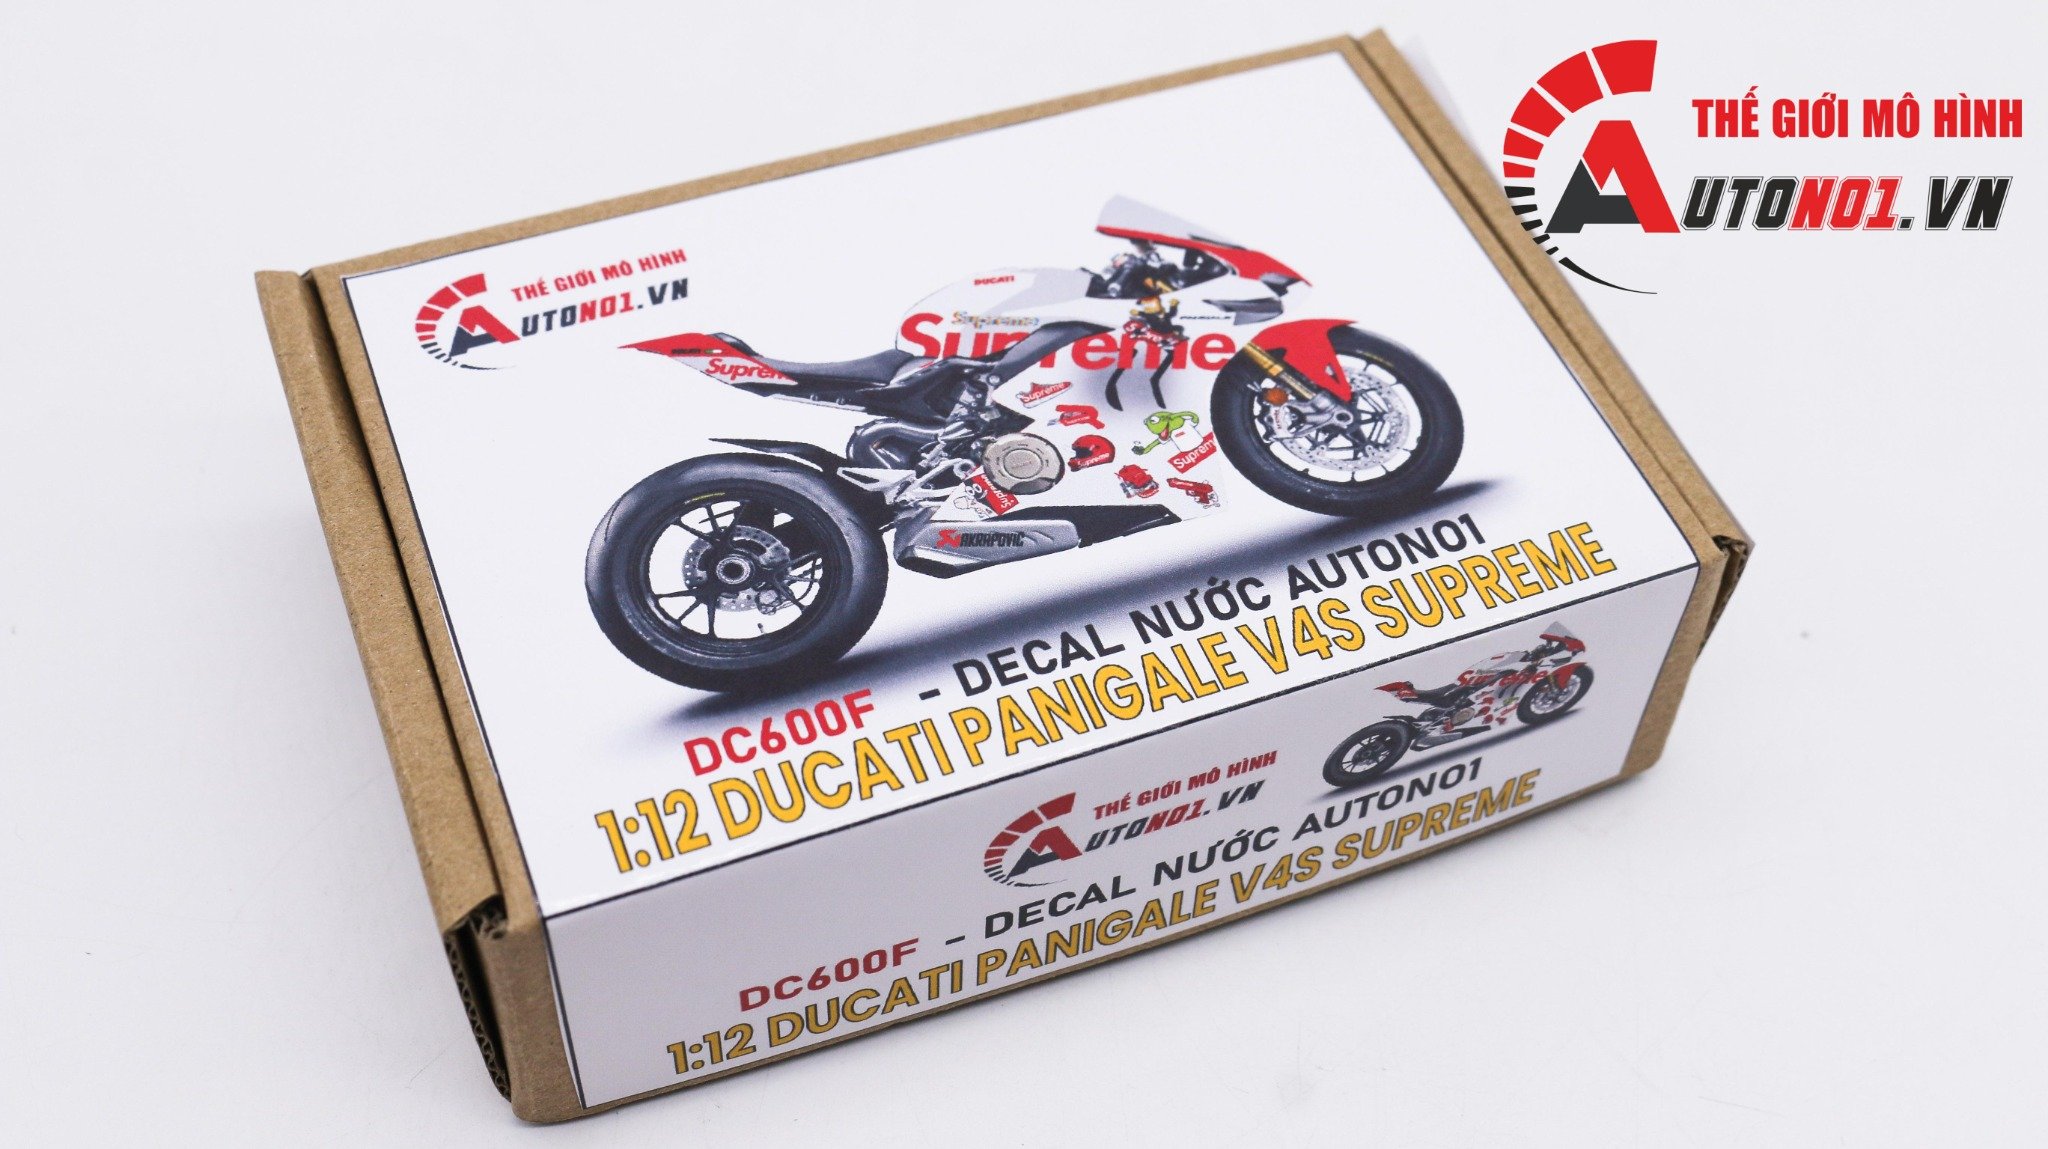  Decal nước độ Ducati Panigale V4S Supreme Red - Decal fullface Ducati Supreme tỉ lệ 1:12 Autono1 DC600f 